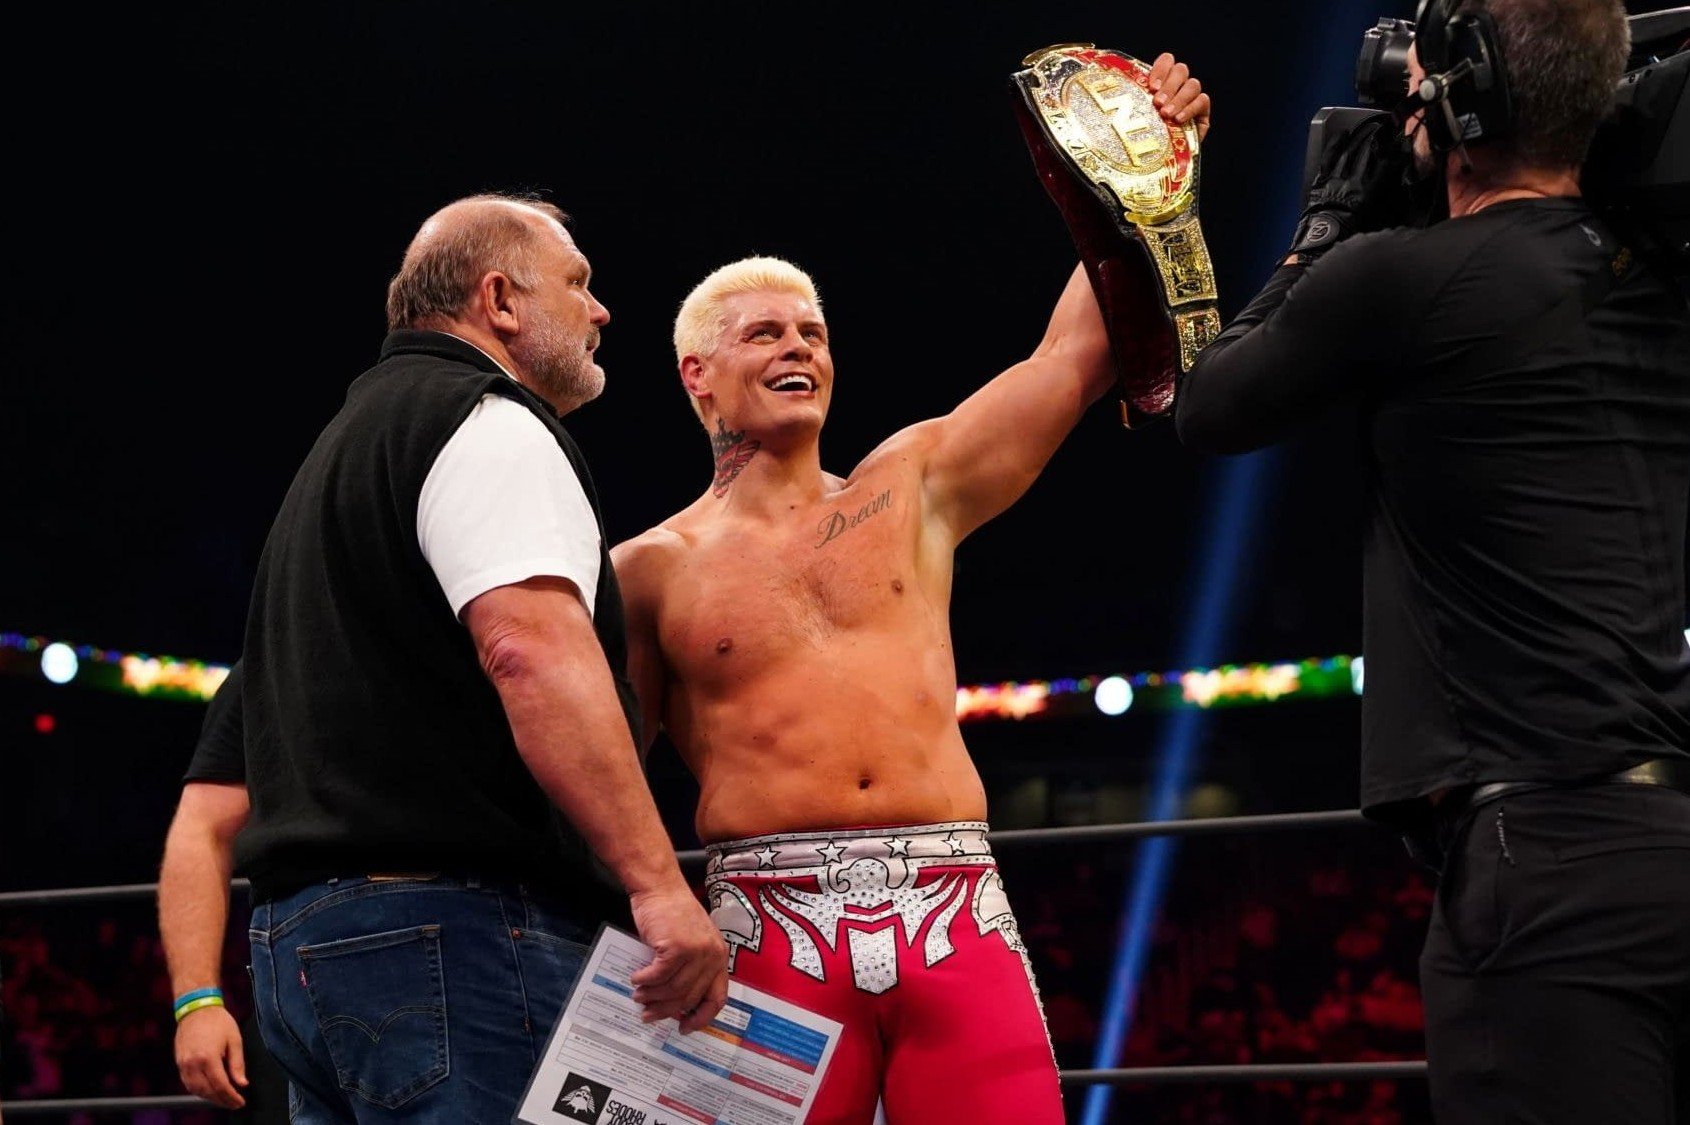 Cody Rhodes winning AEW TNT Championship